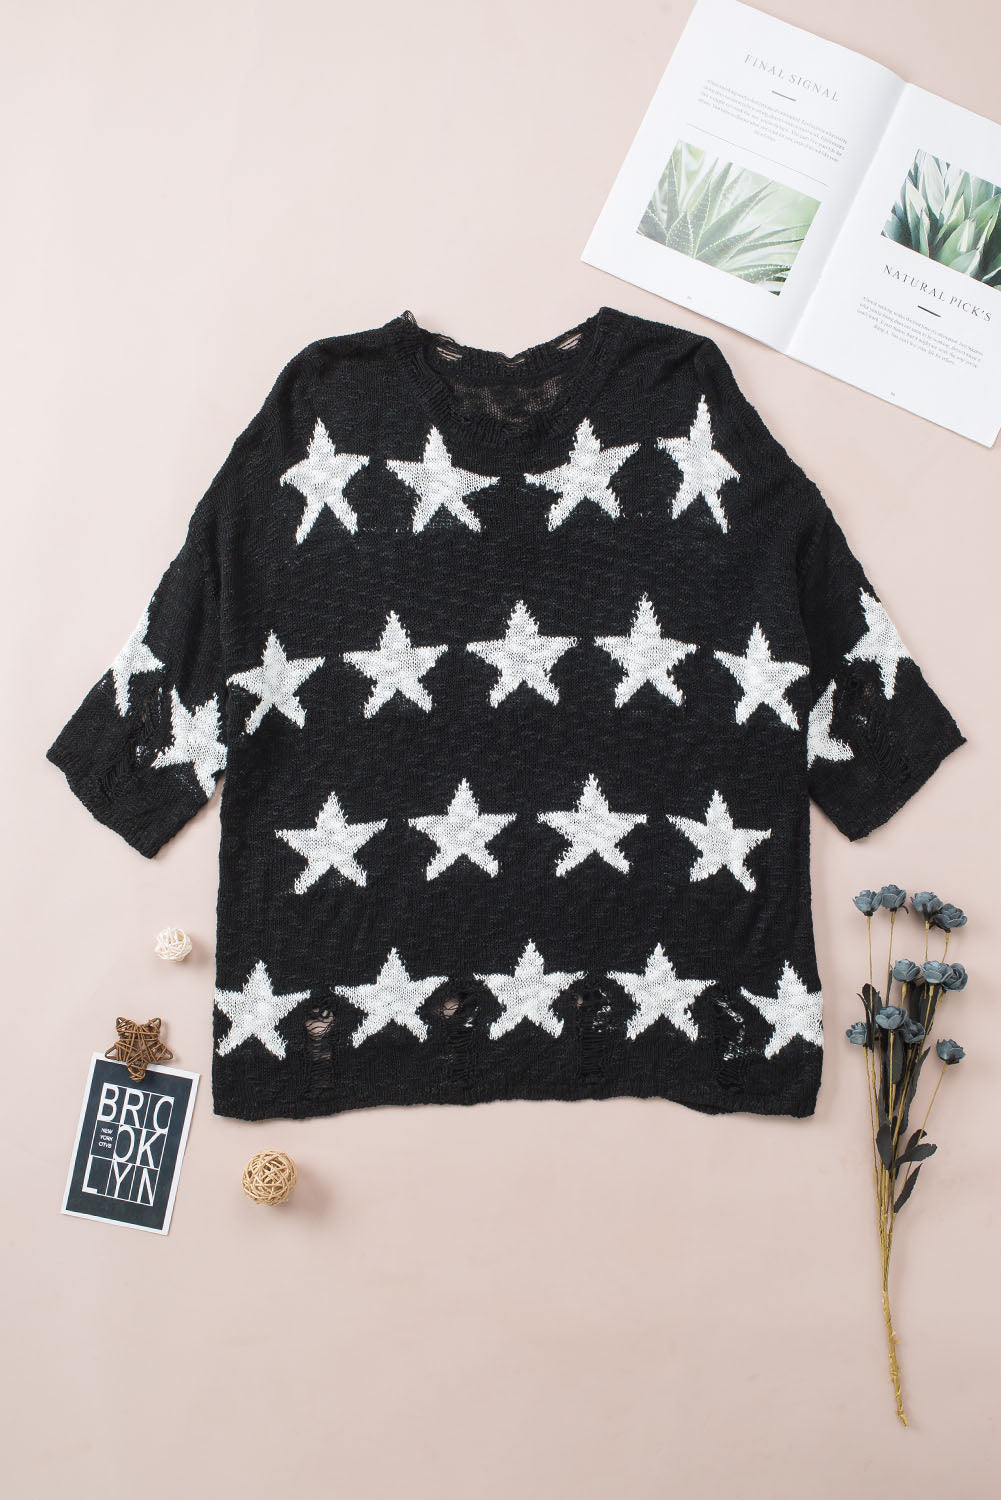 Black Star Print Half Sleeve Distressed Knit Top